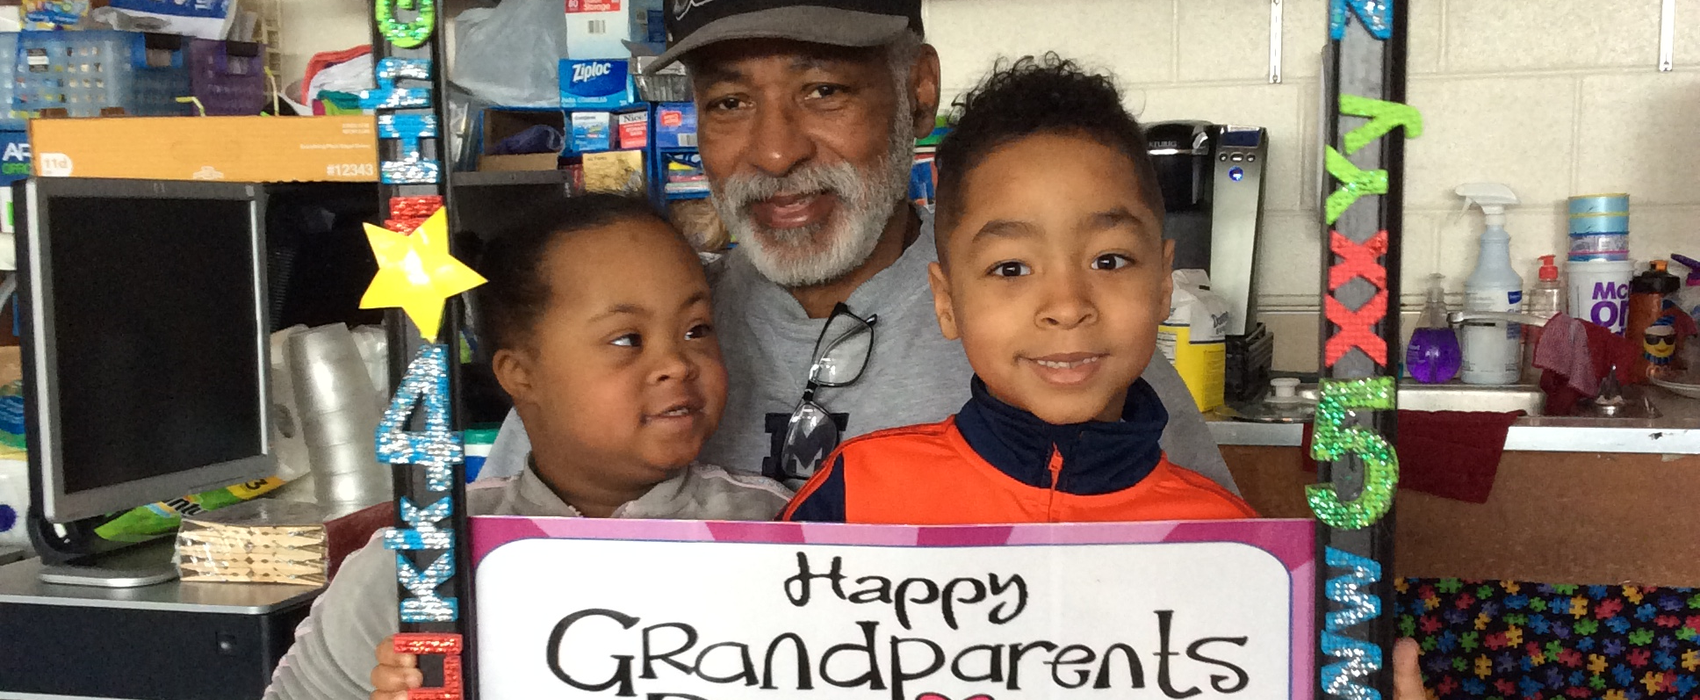 Grandparent's are appreciated and recognized at Vandenberg!